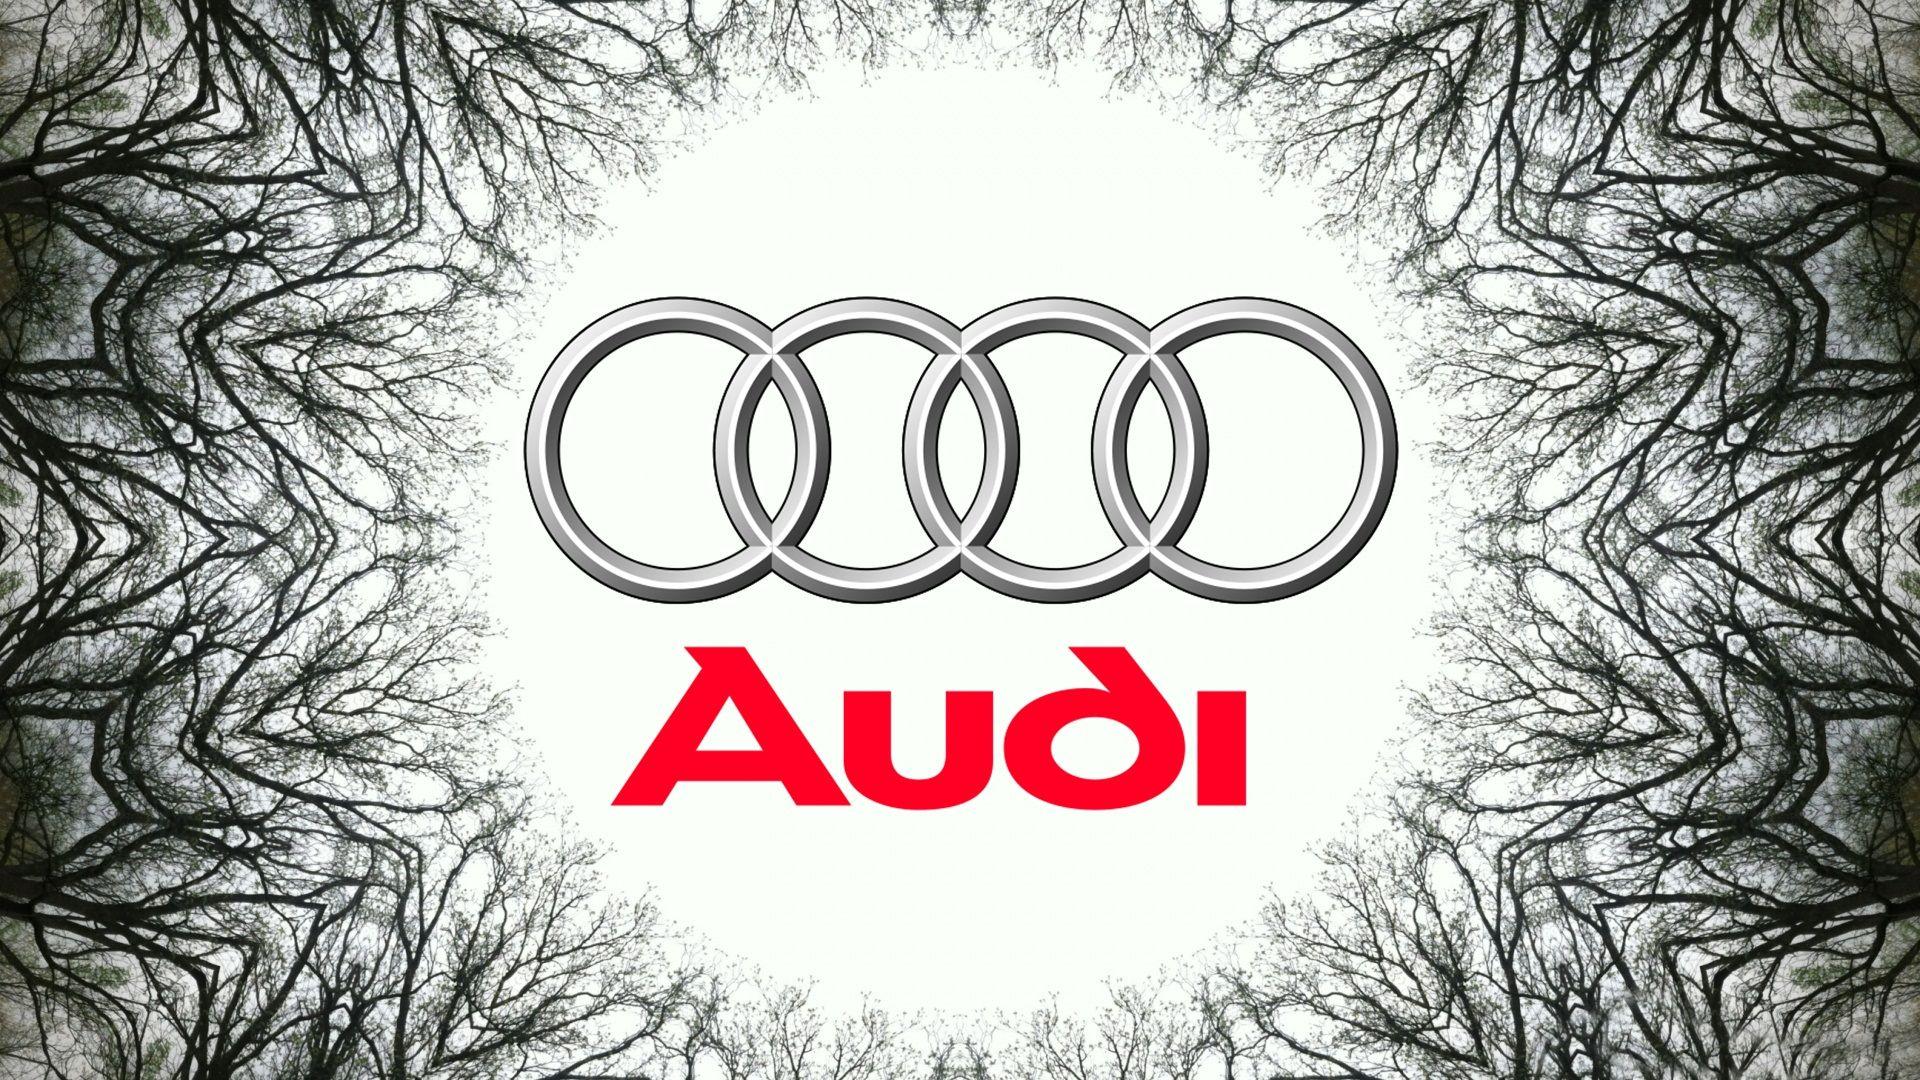 Audi logo wallpaper by Meisan91  Download on ZEDGE  4837